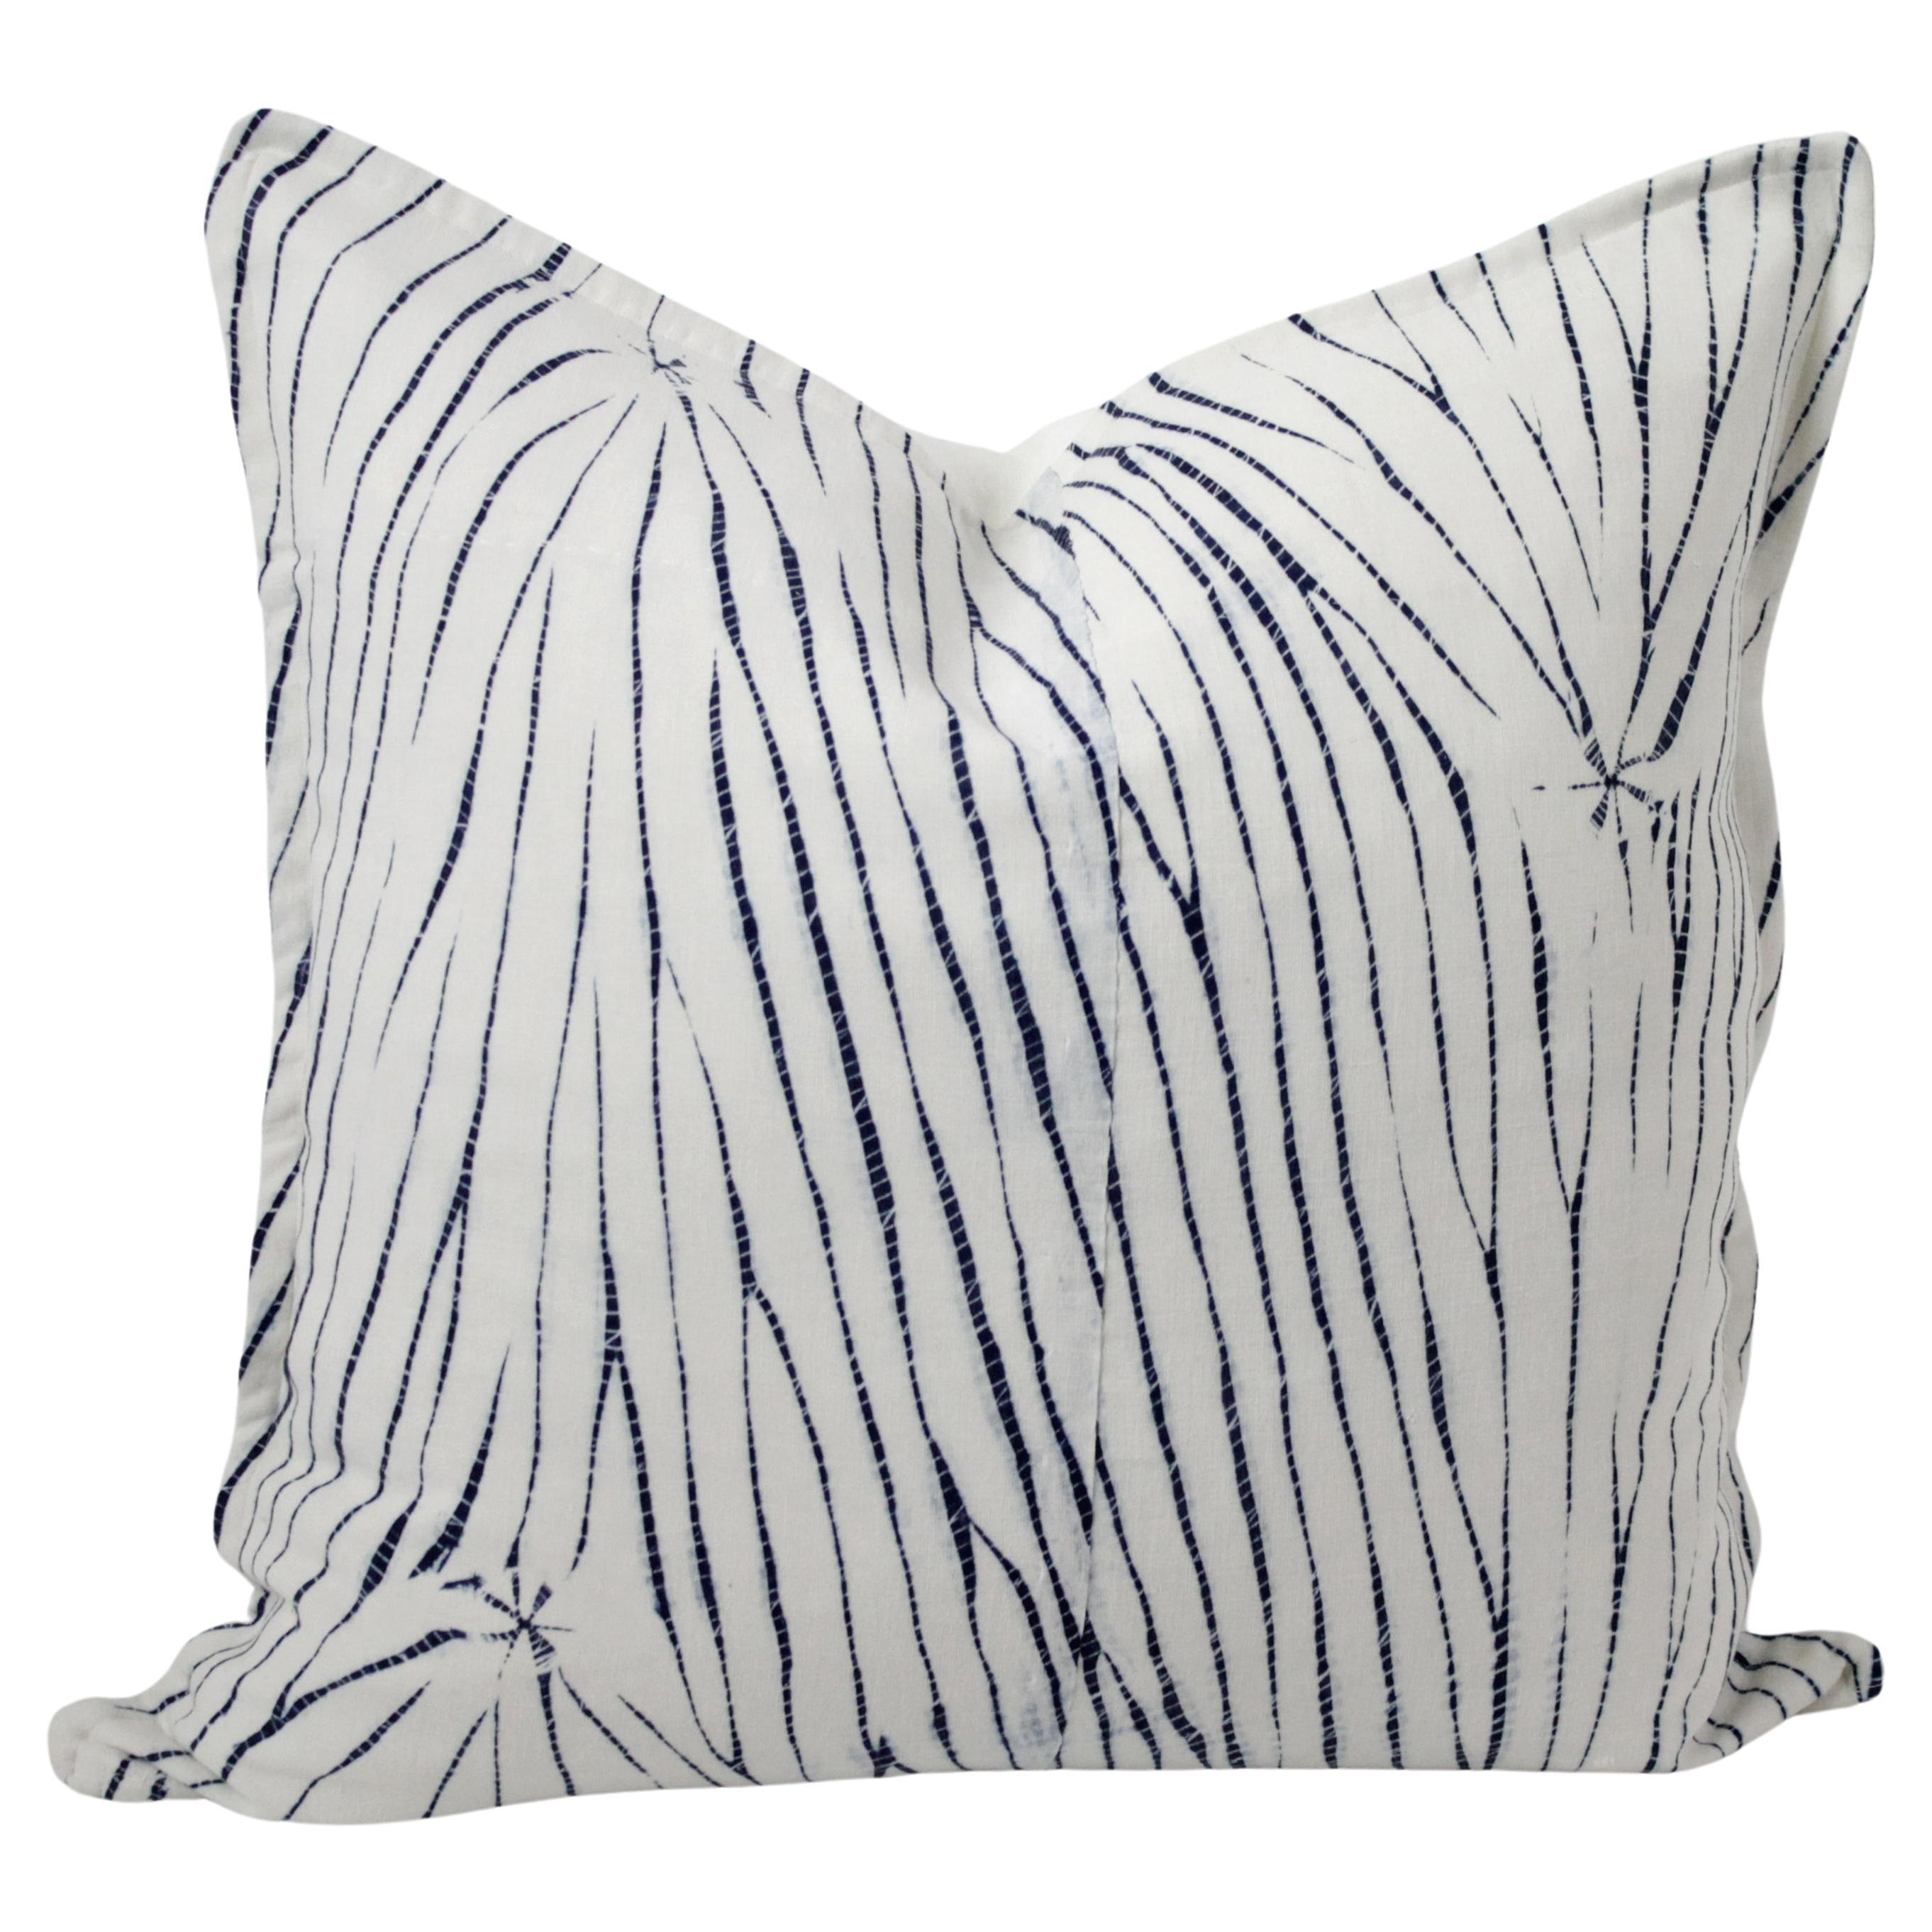 Vintage Shibori Dyed Textile Pillow with White Linen For Sale